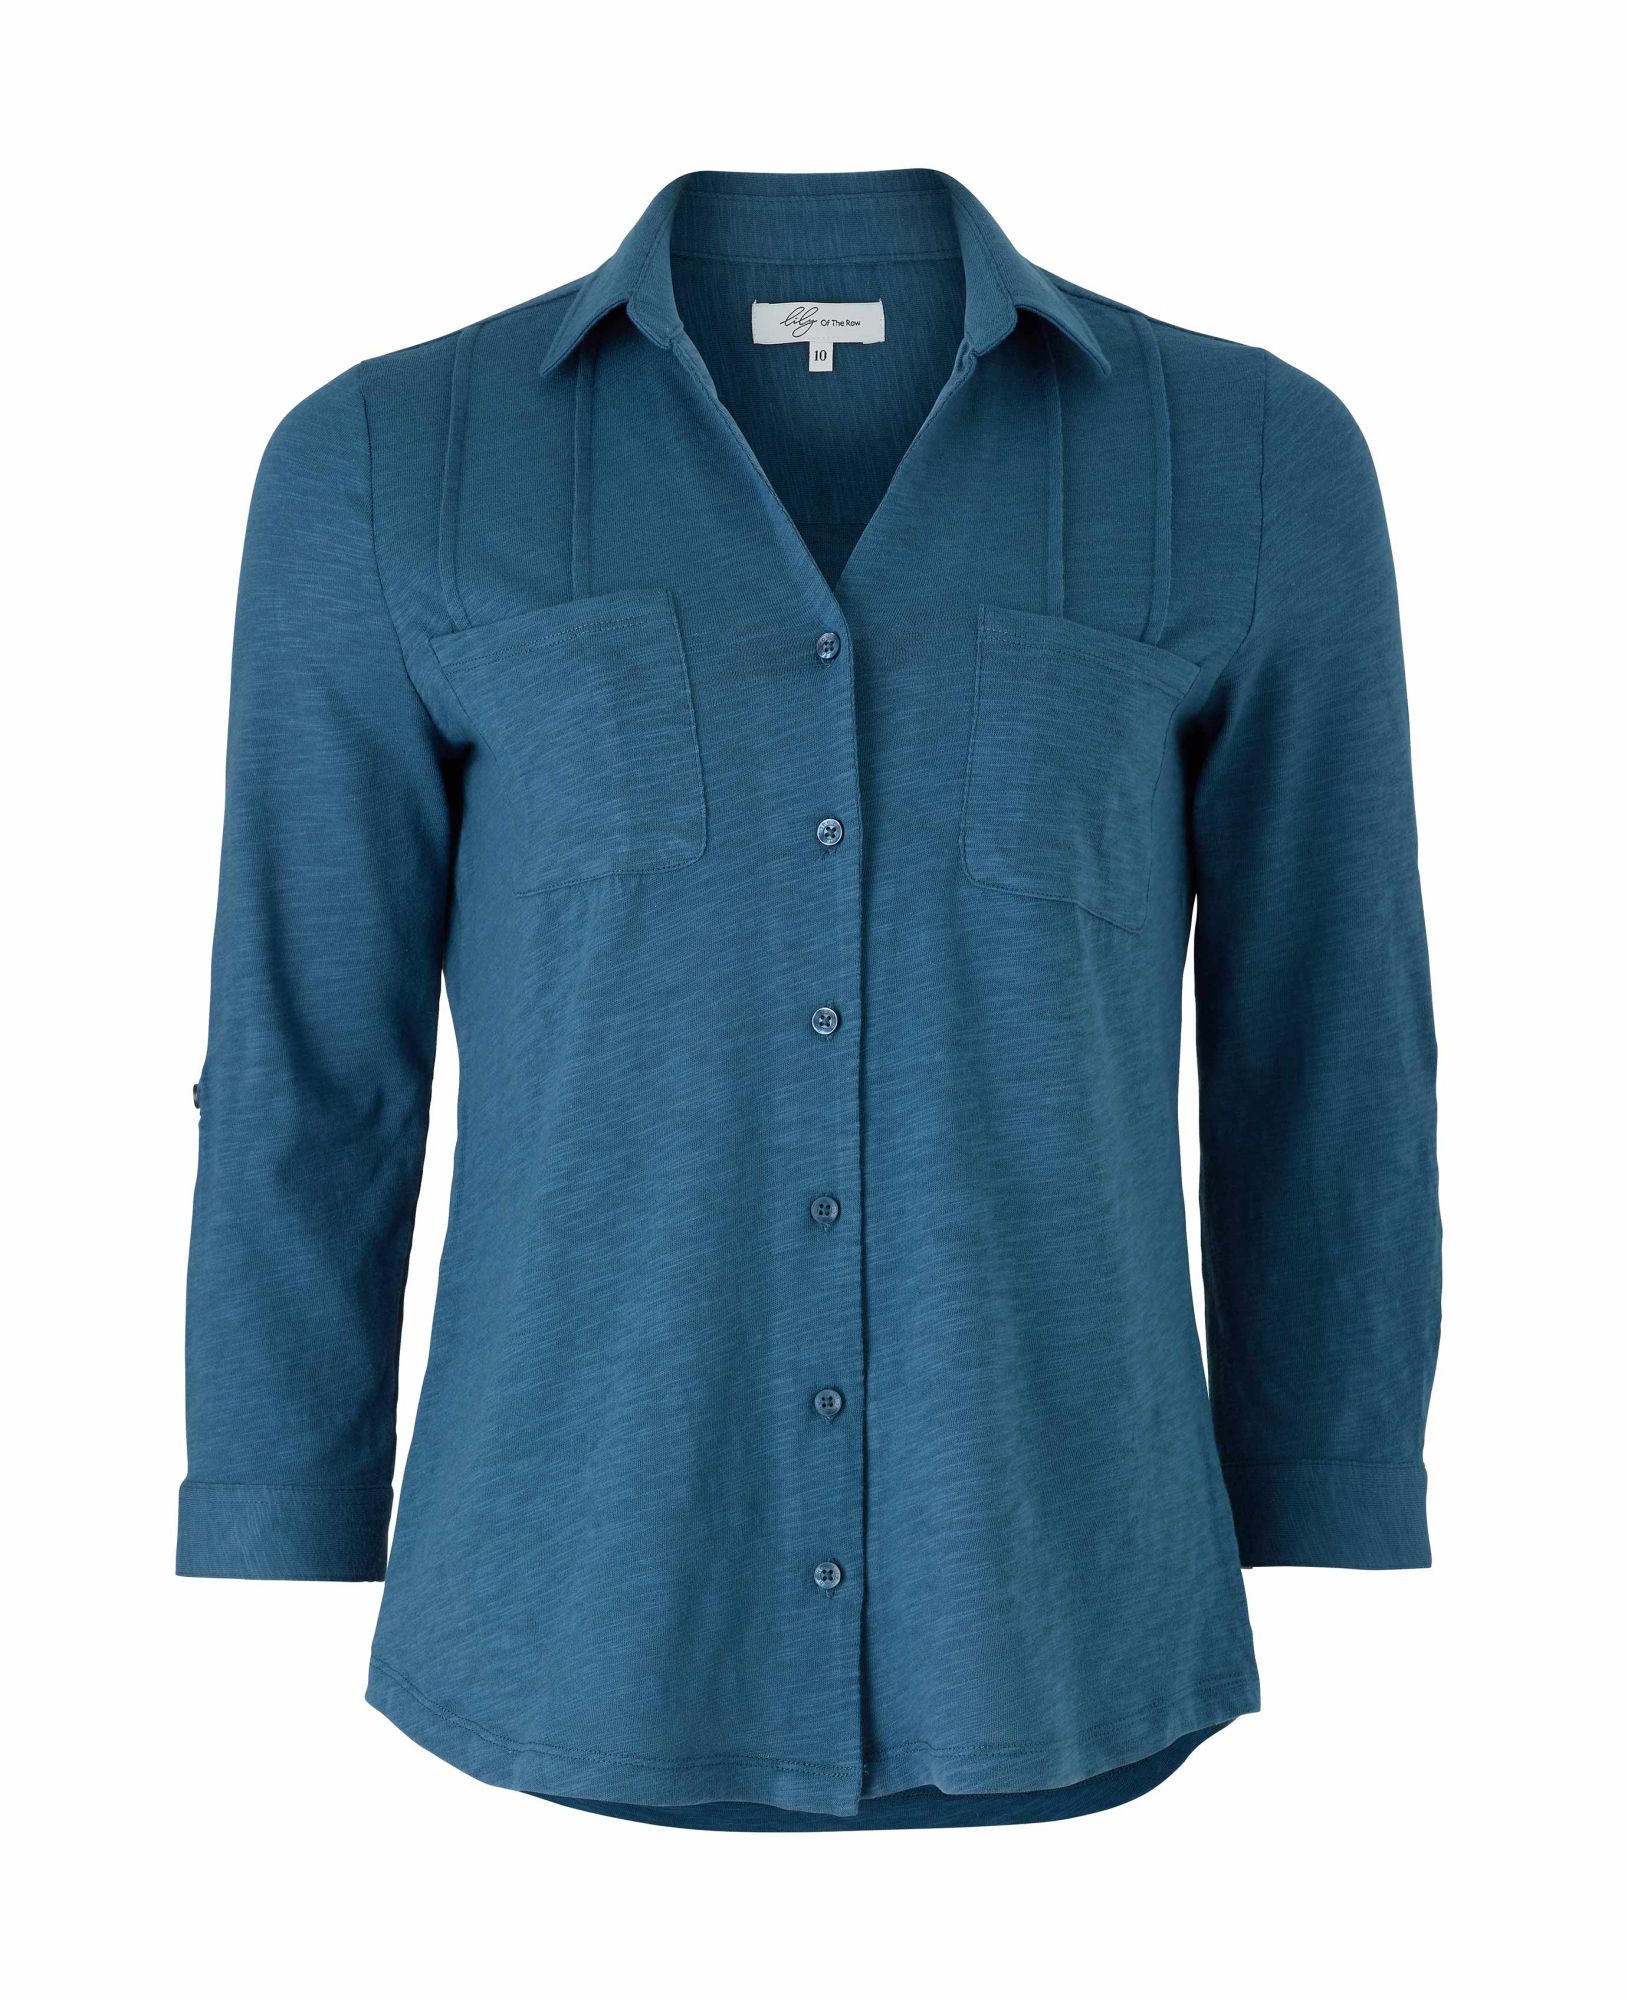 Denim Blue Slub Cotton 3/4 Sleeve Women's Shirt 16